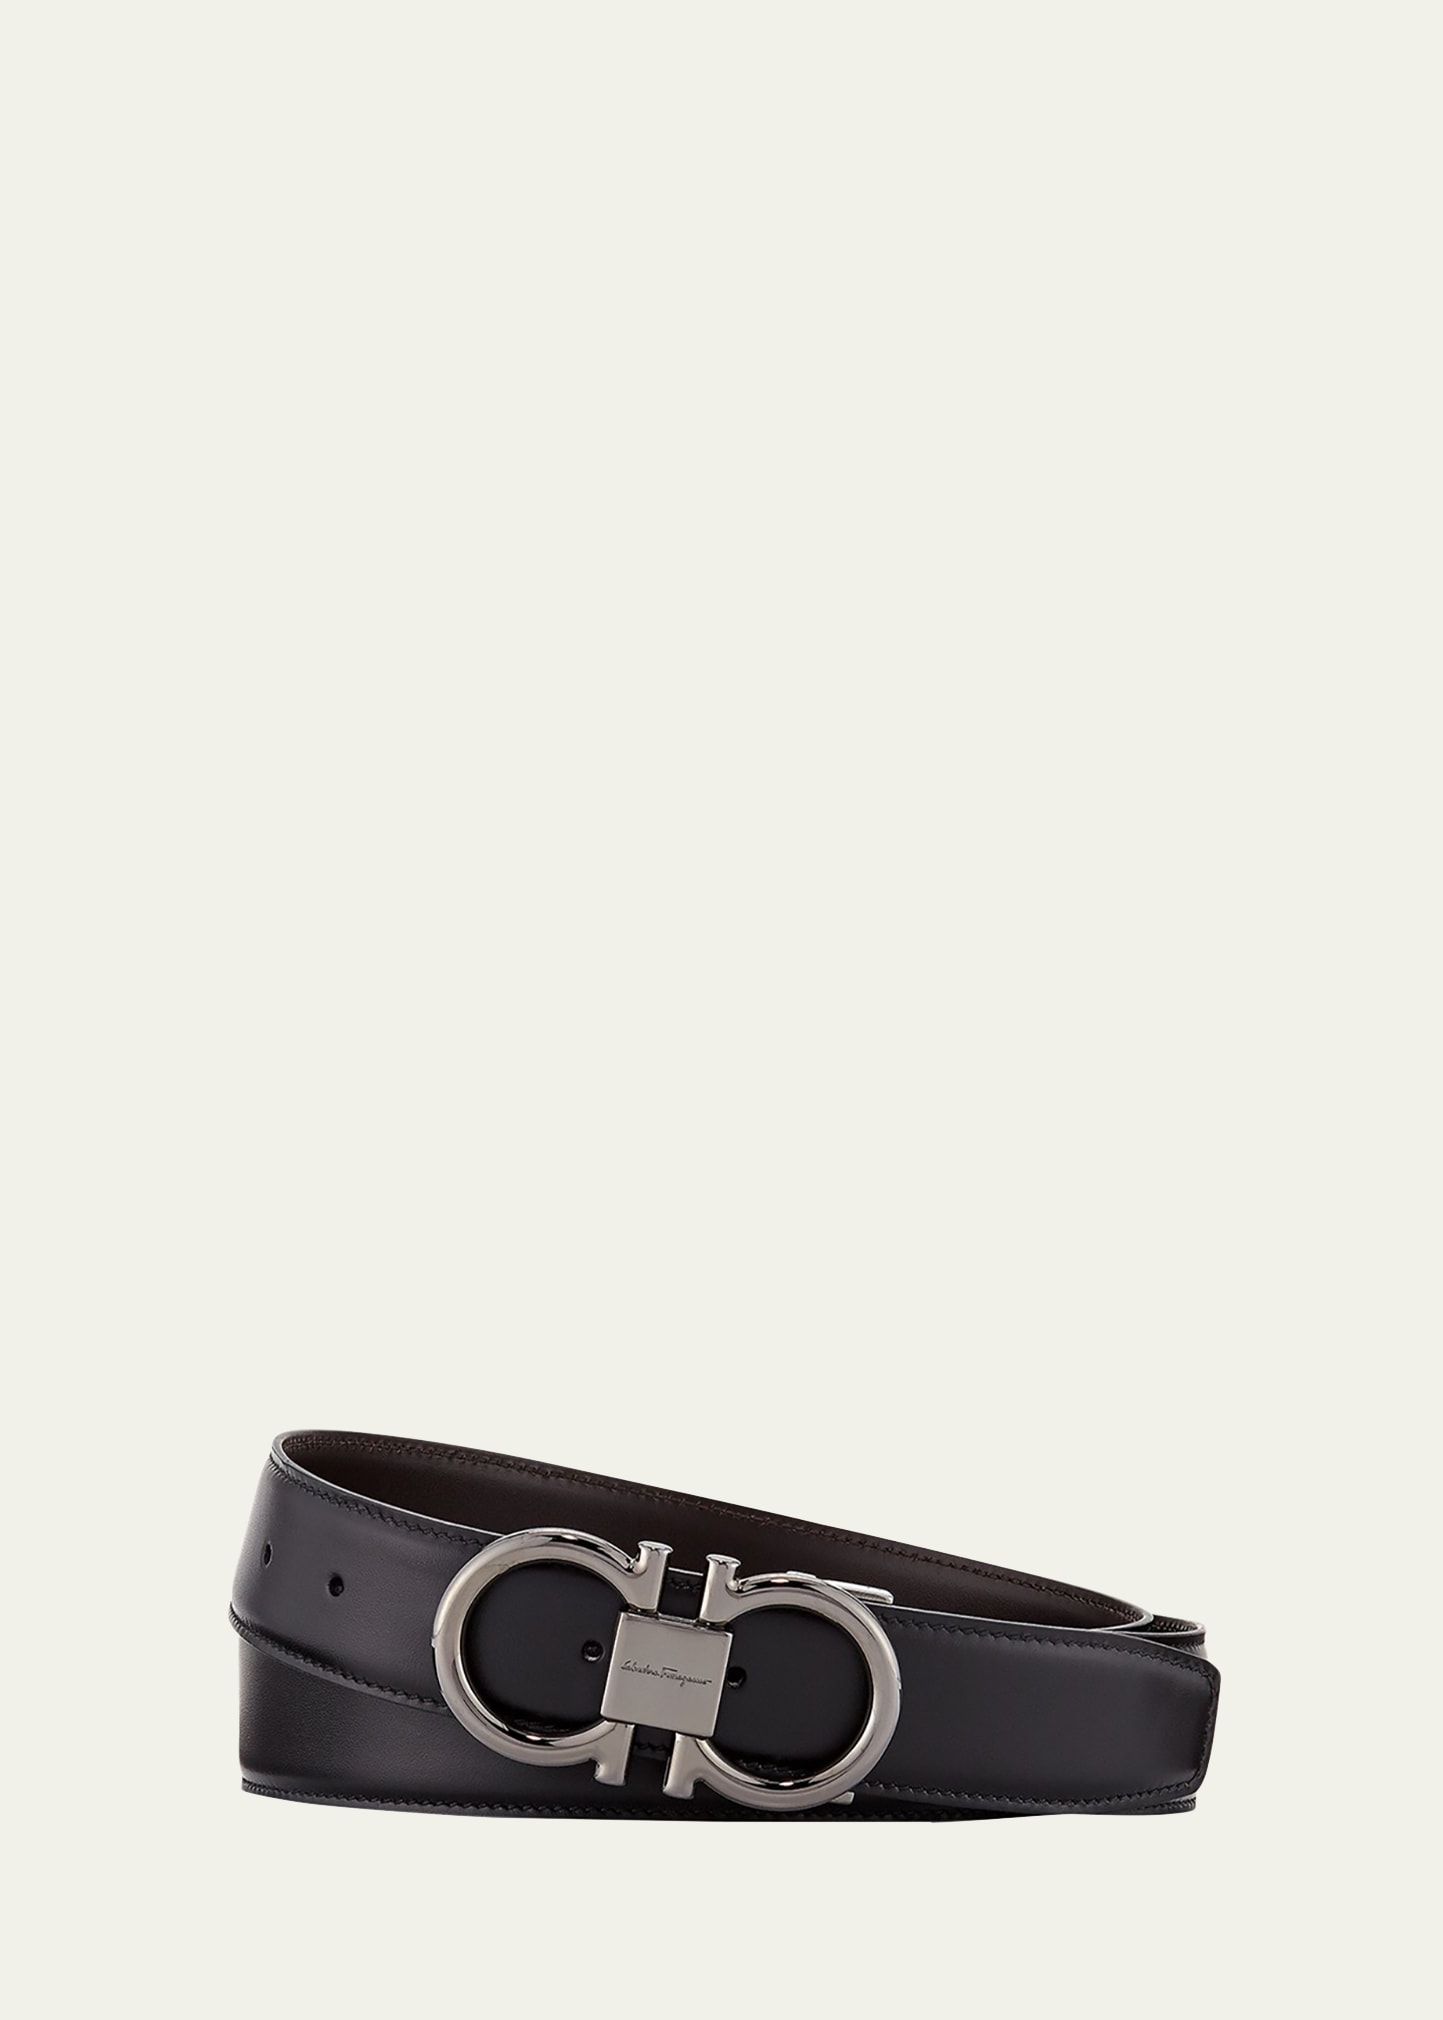 Salvatore Ferragamo Men's Reversible Leather Belt - Black Size 36